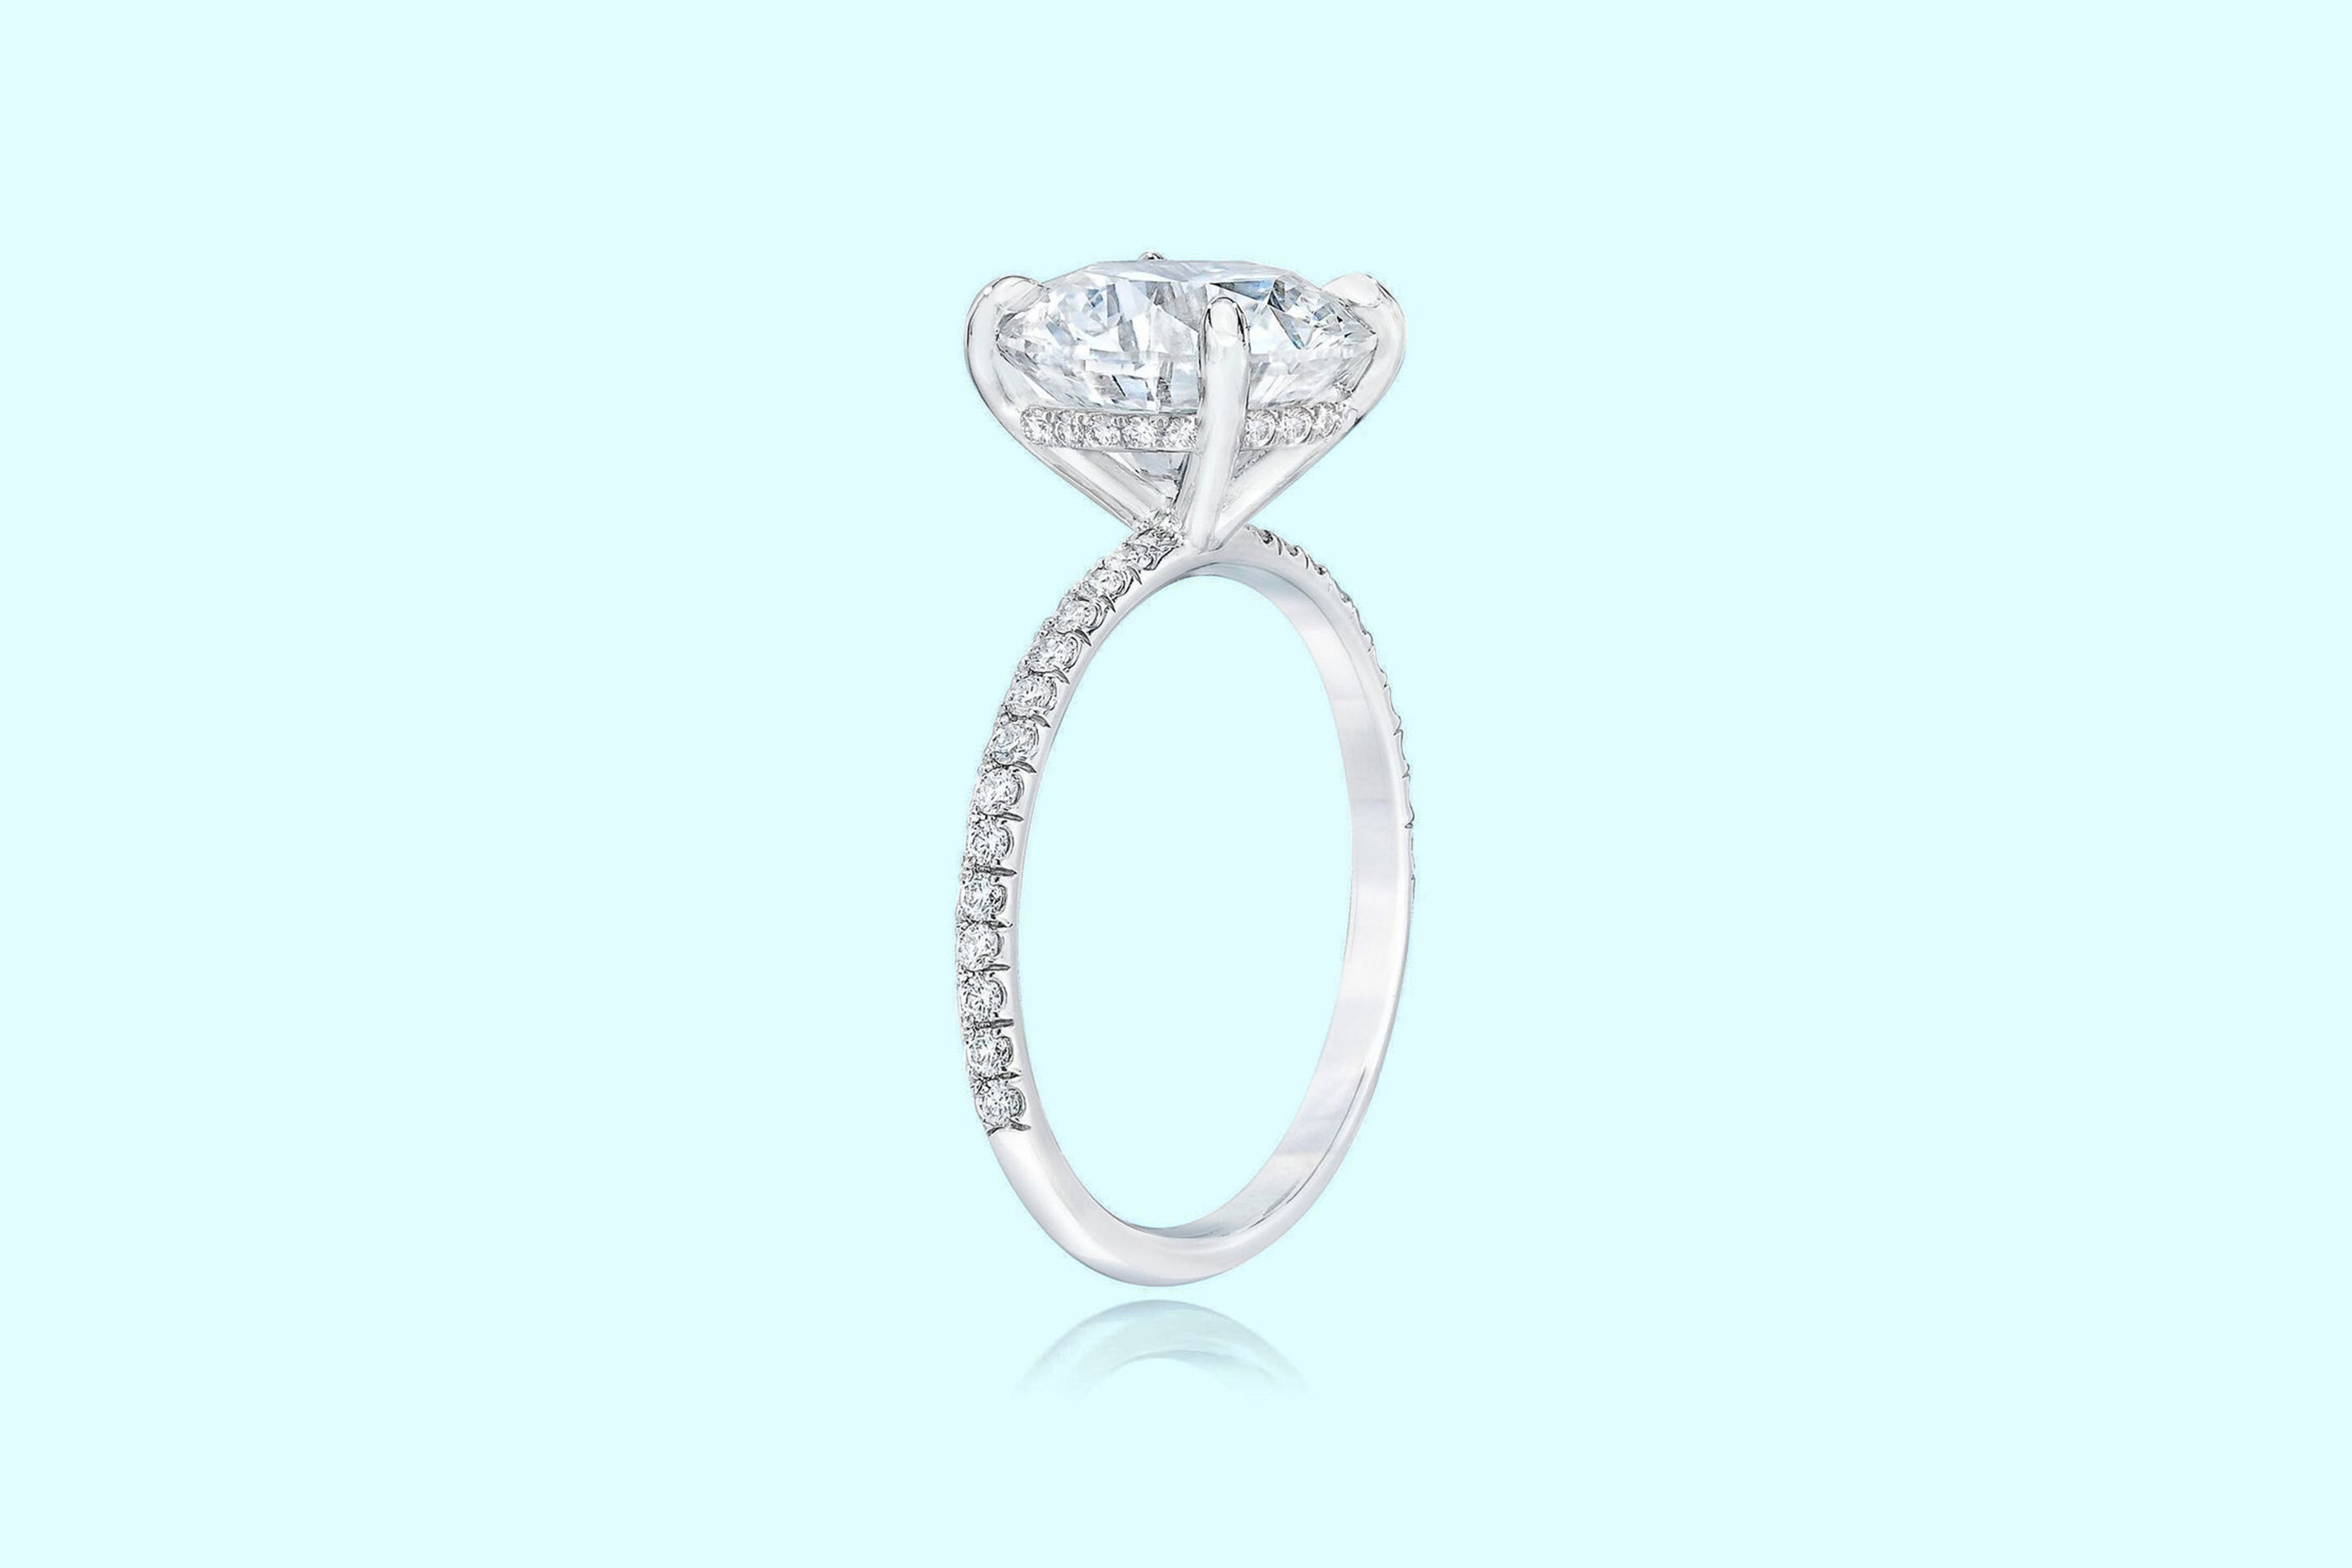 hospita Steil regel How to Buy an Engagement Ring: Diamond Ring Shopping Guide | Money